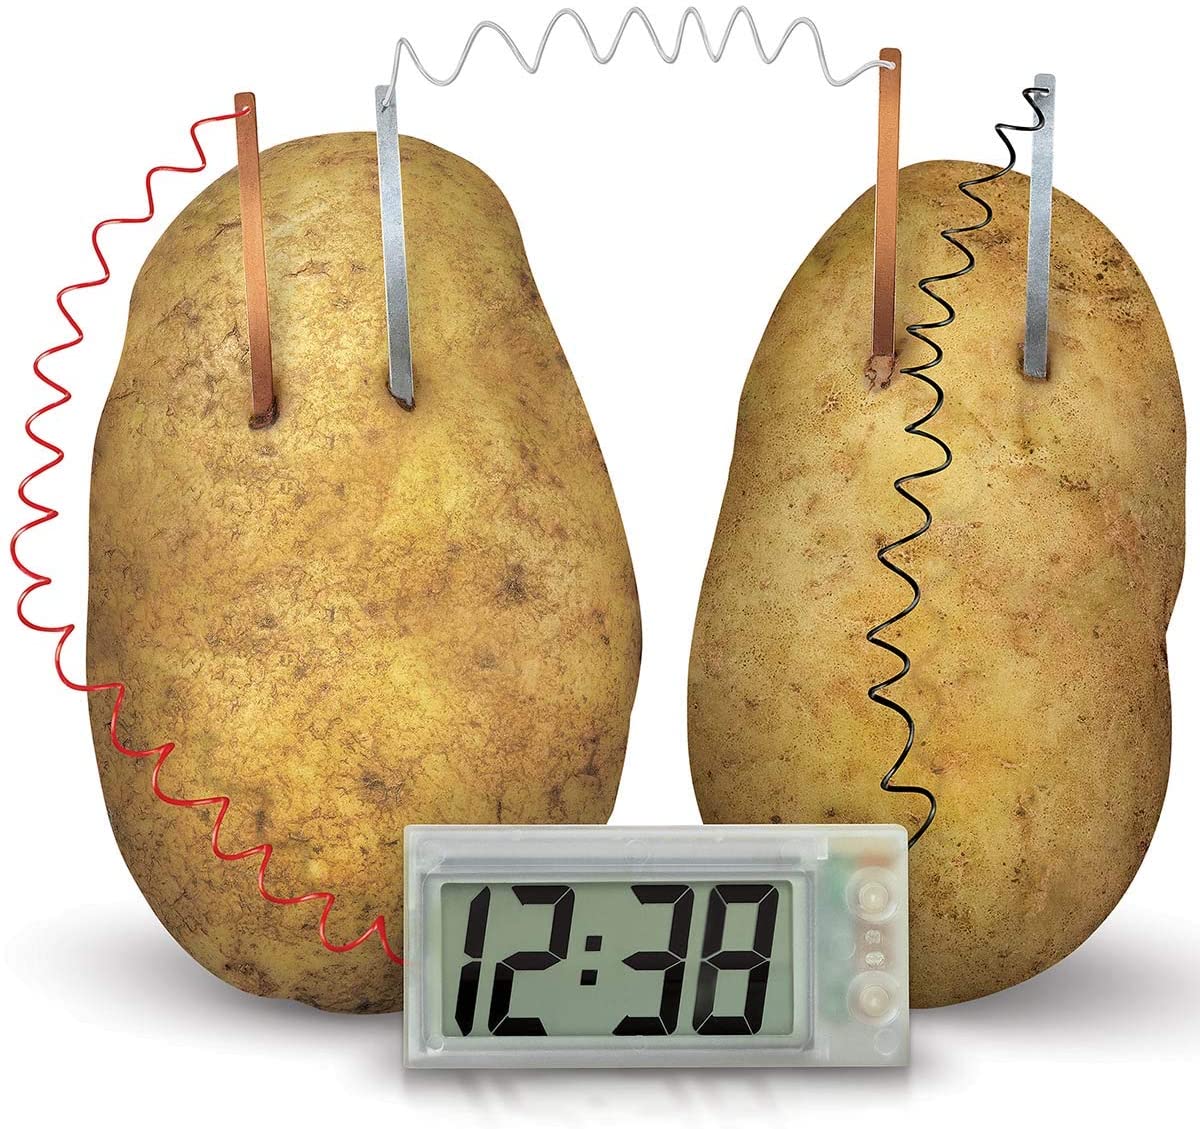 Potato Clock Science Set